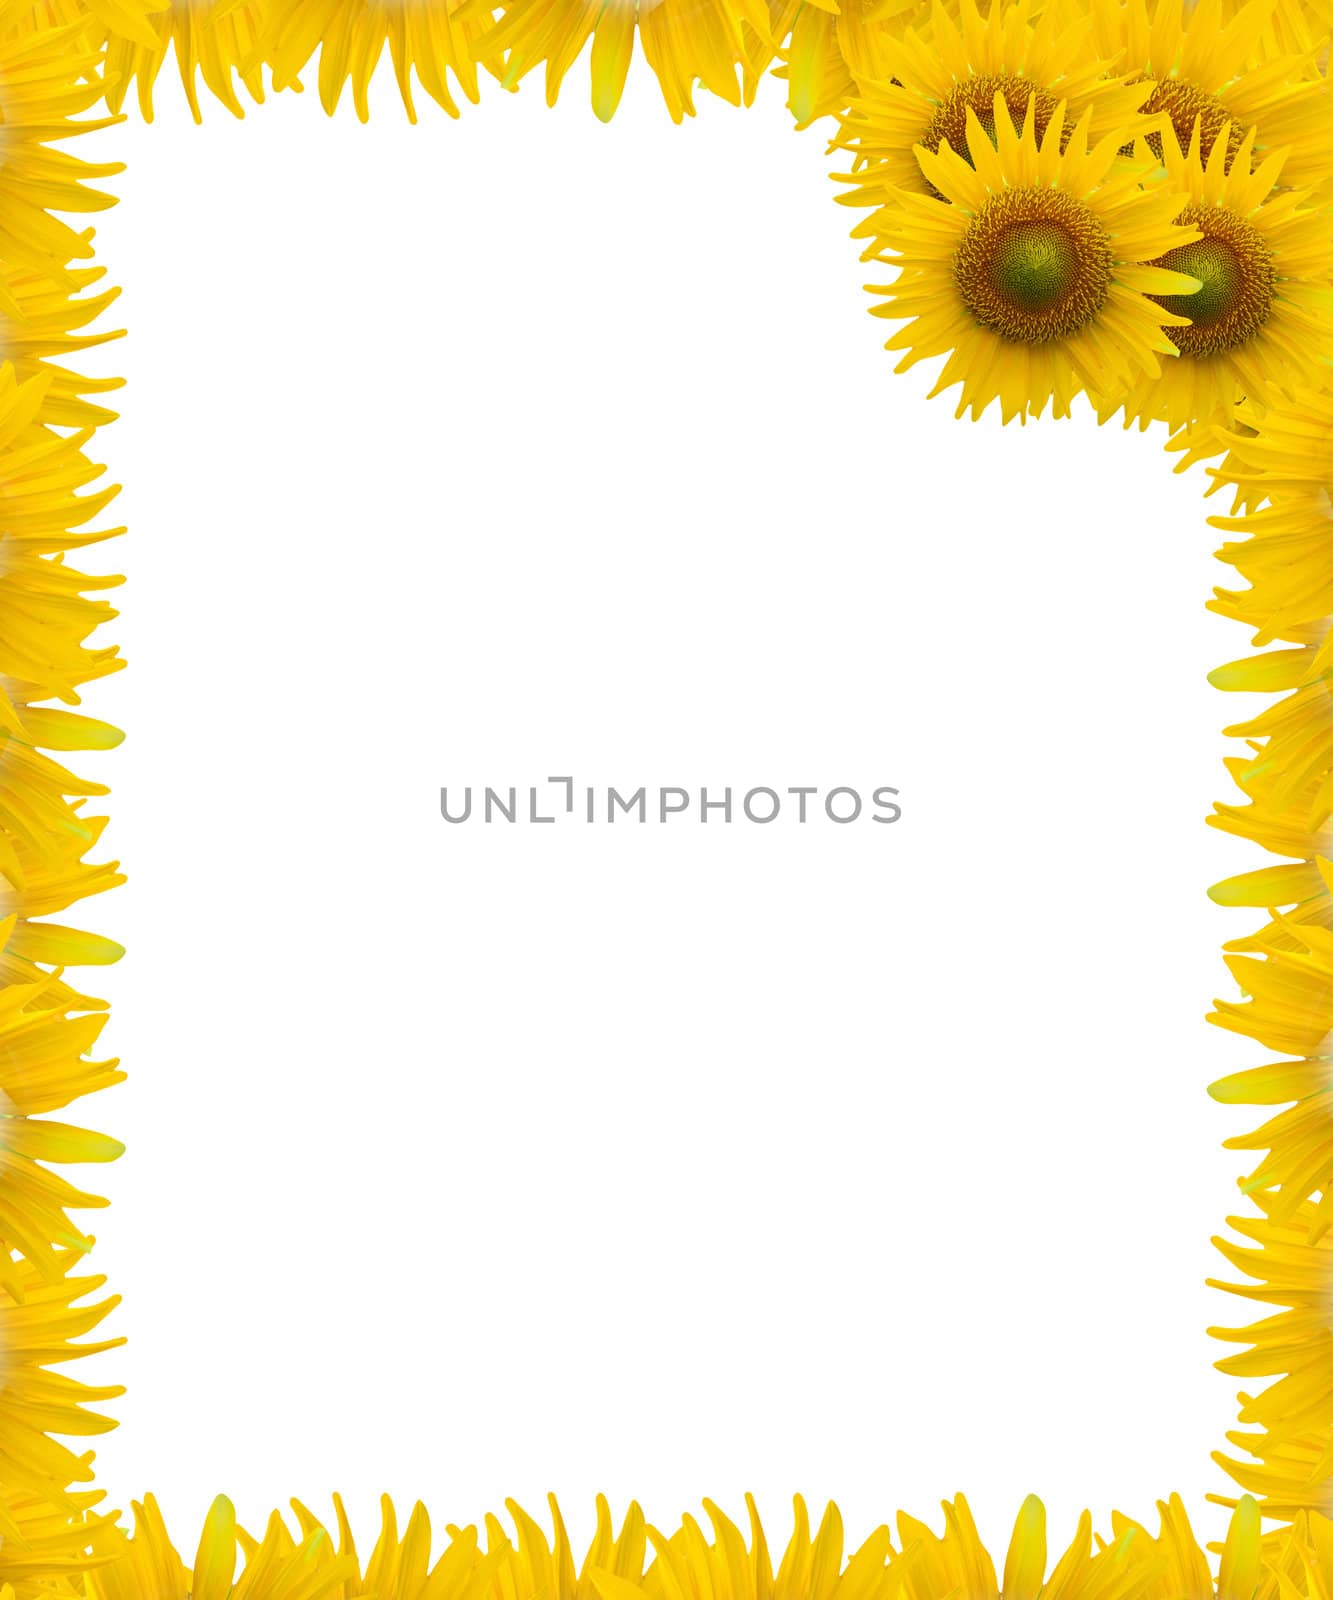 background for 2012 calendar with Sunflower frame design